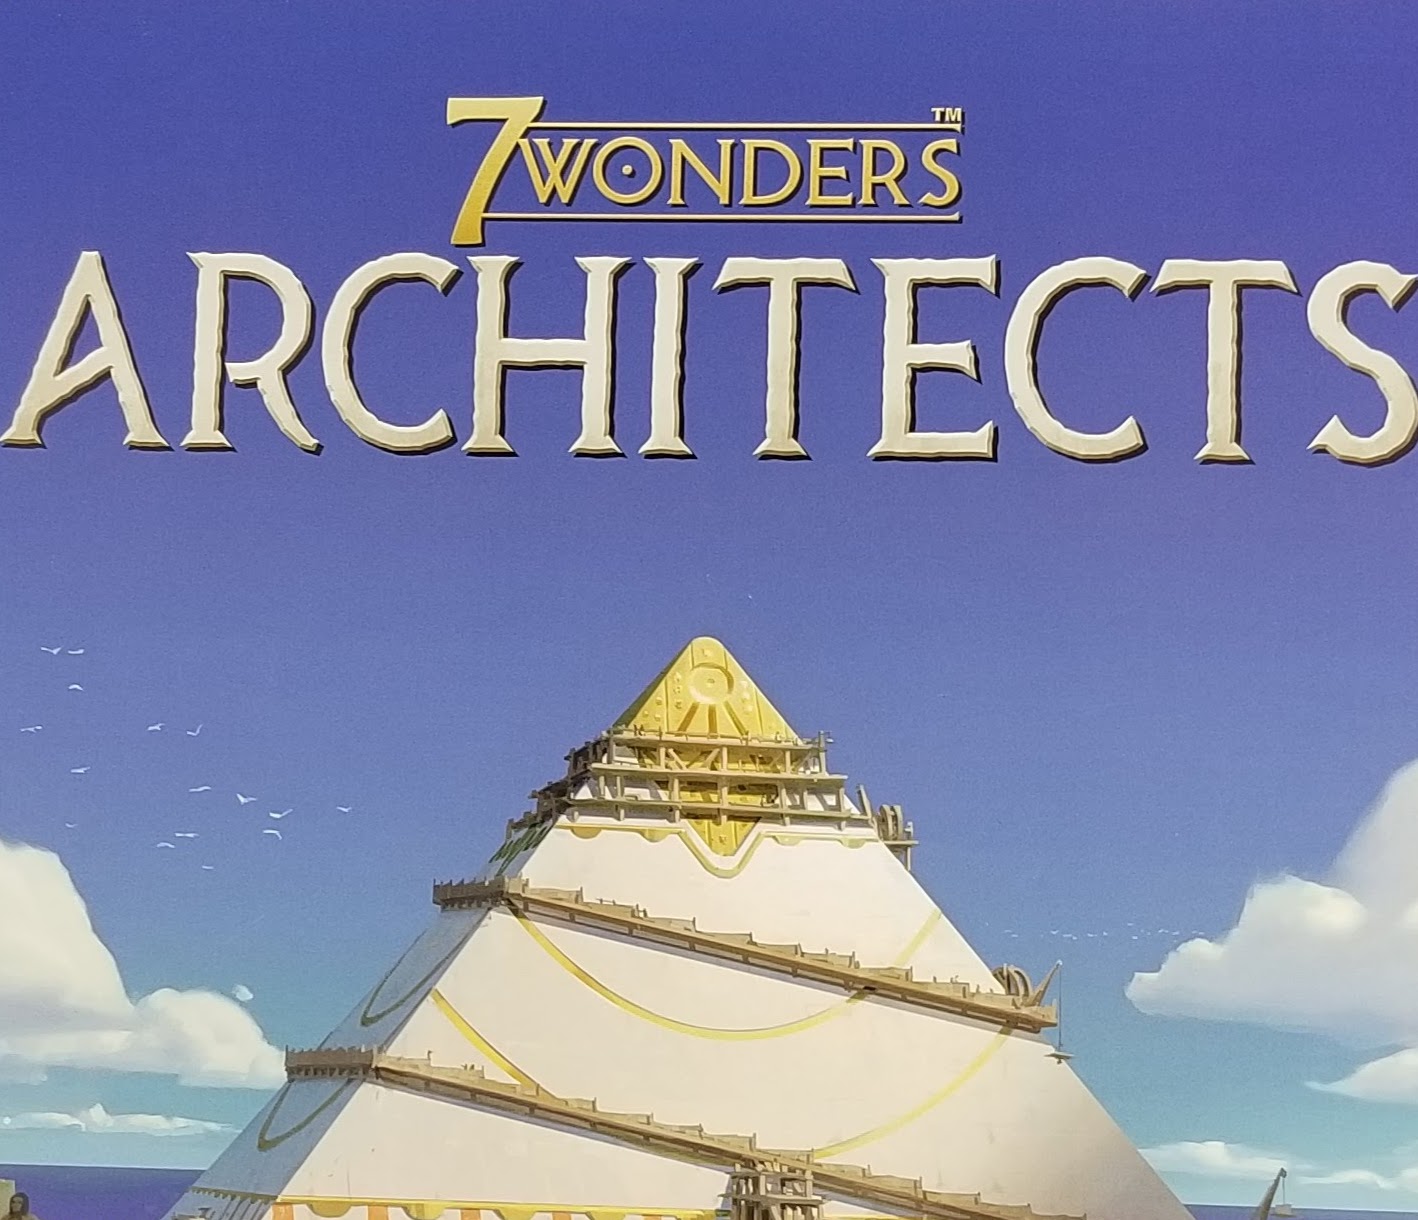 7 Wonders Architects